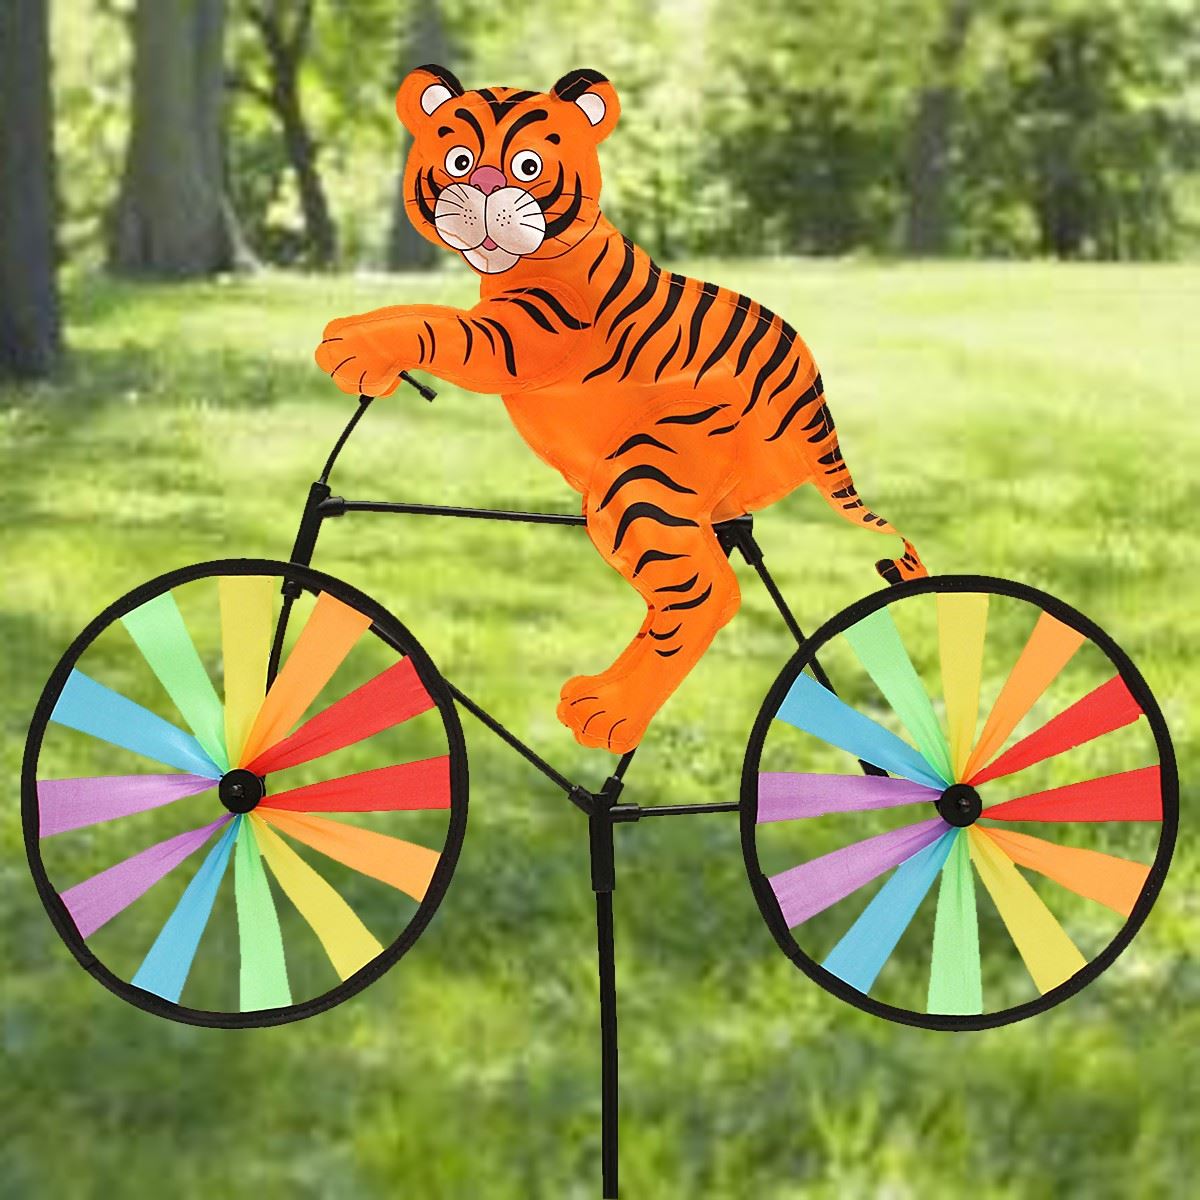 Tiger on Bike DIY Windmill Animal Bicycle Wind Spinner Whirligig 